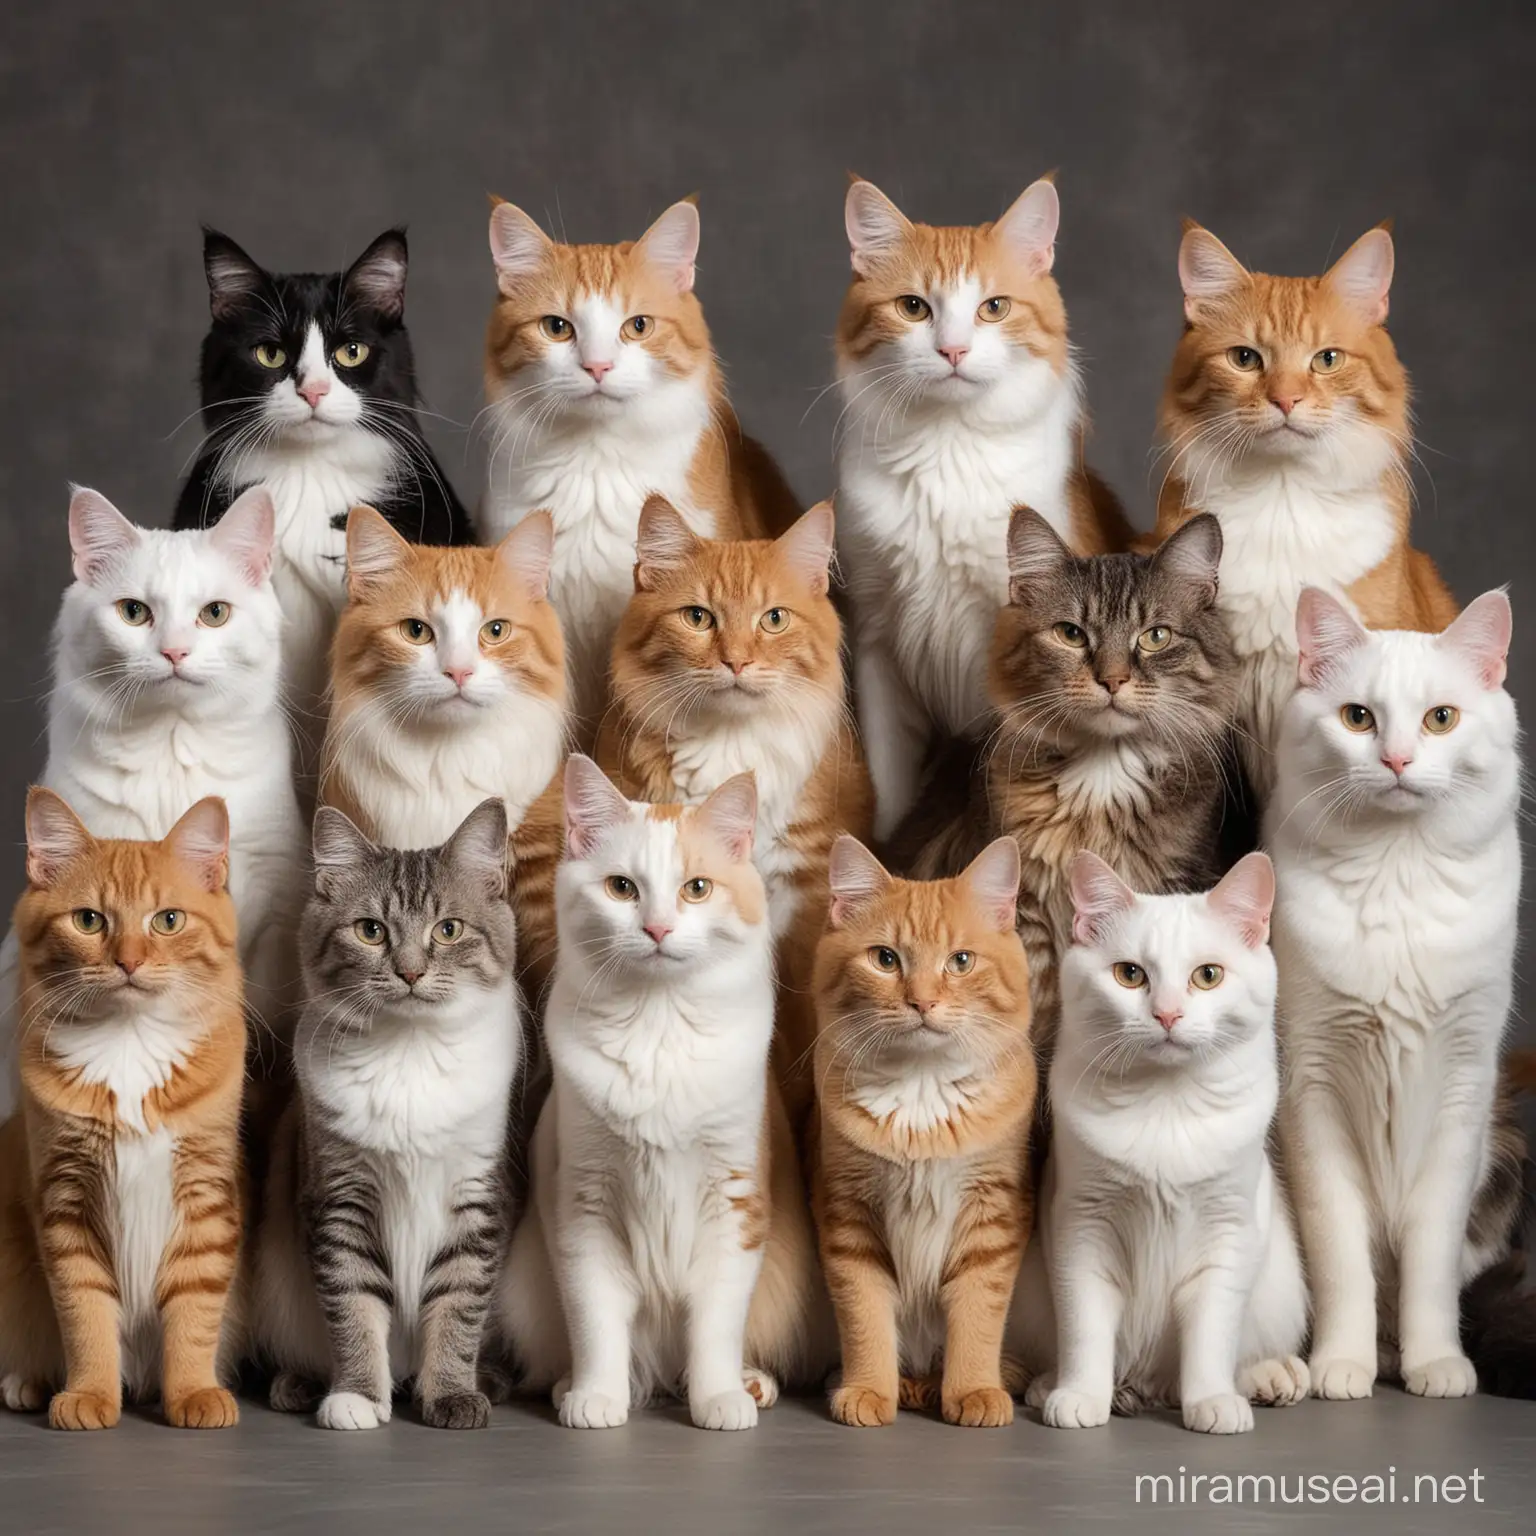 Diverse Cat Breeds Gathered Together